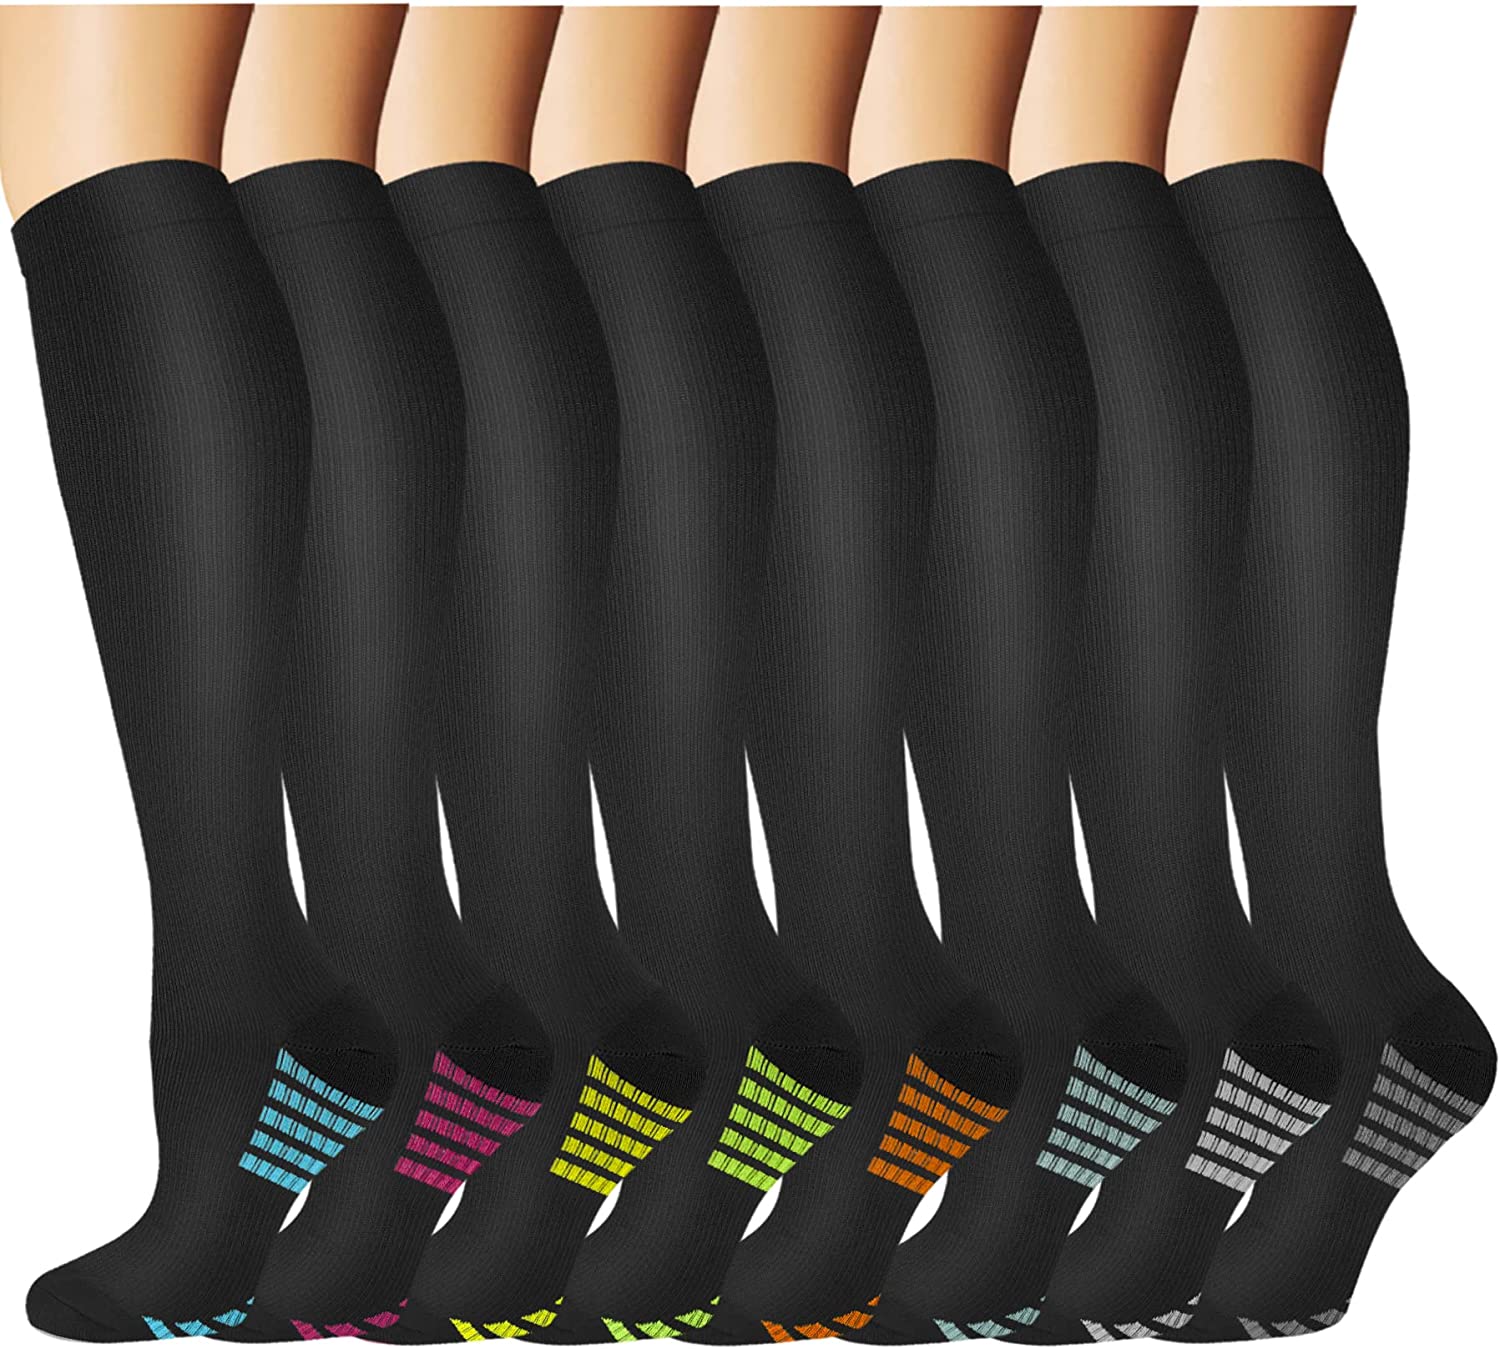 Graduated Copper Compression Socks for Men & Women Circulation 8 Pairs  15-20mmHg